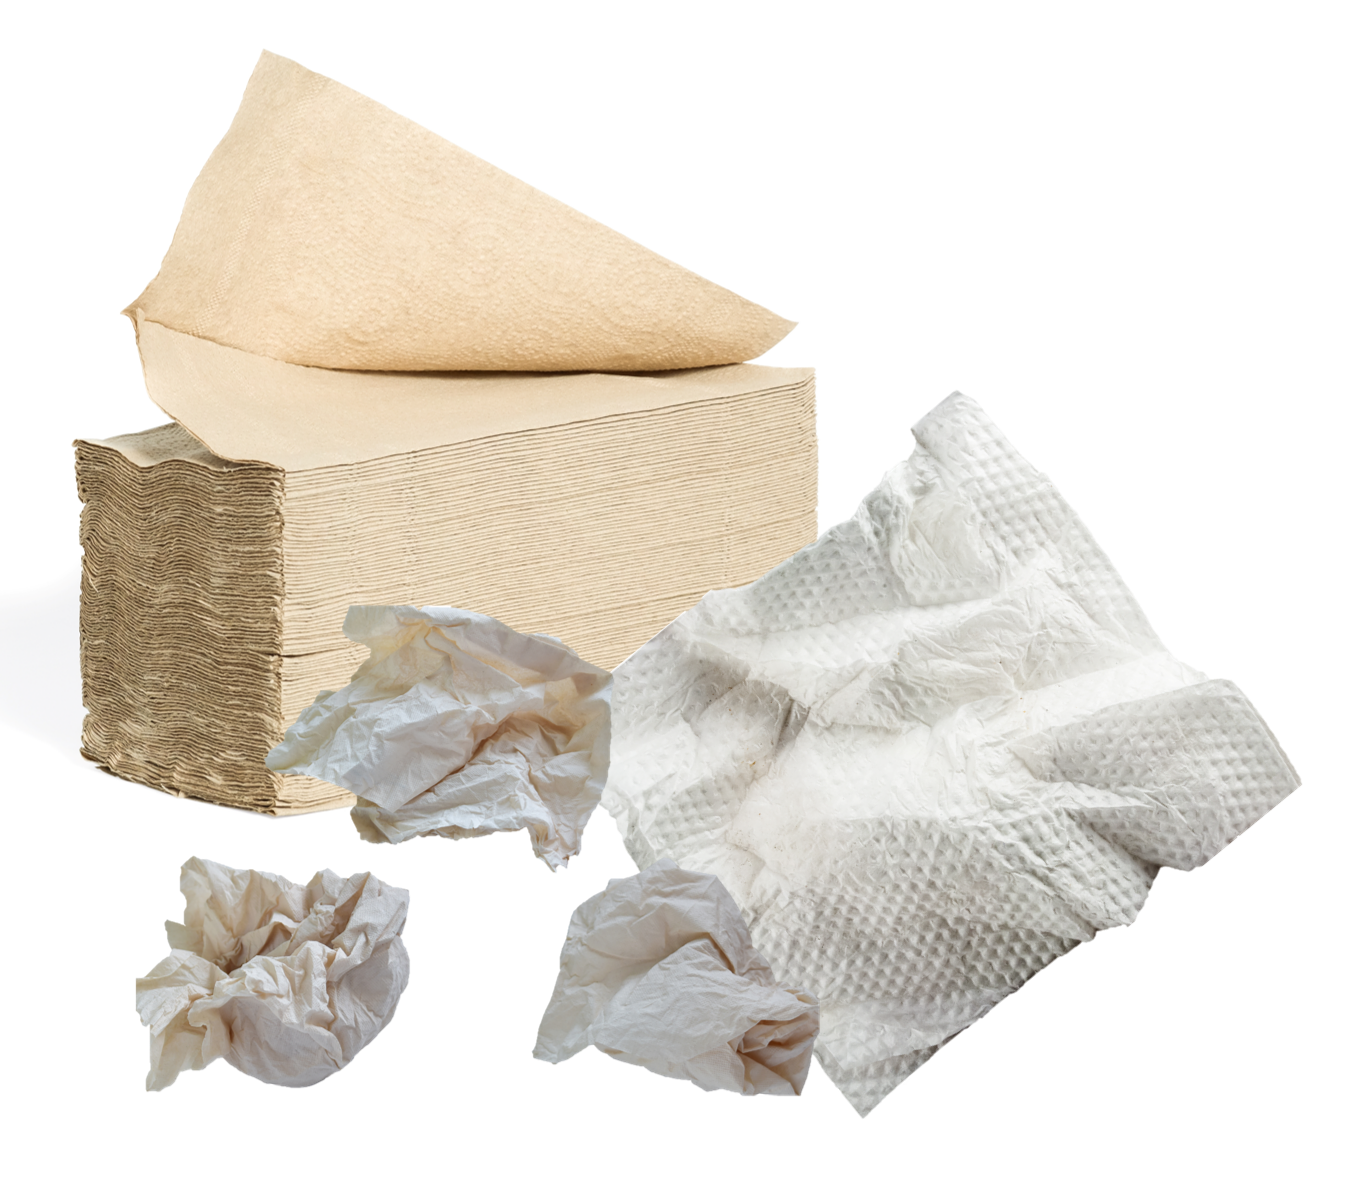 Napkins and hand towel contamination